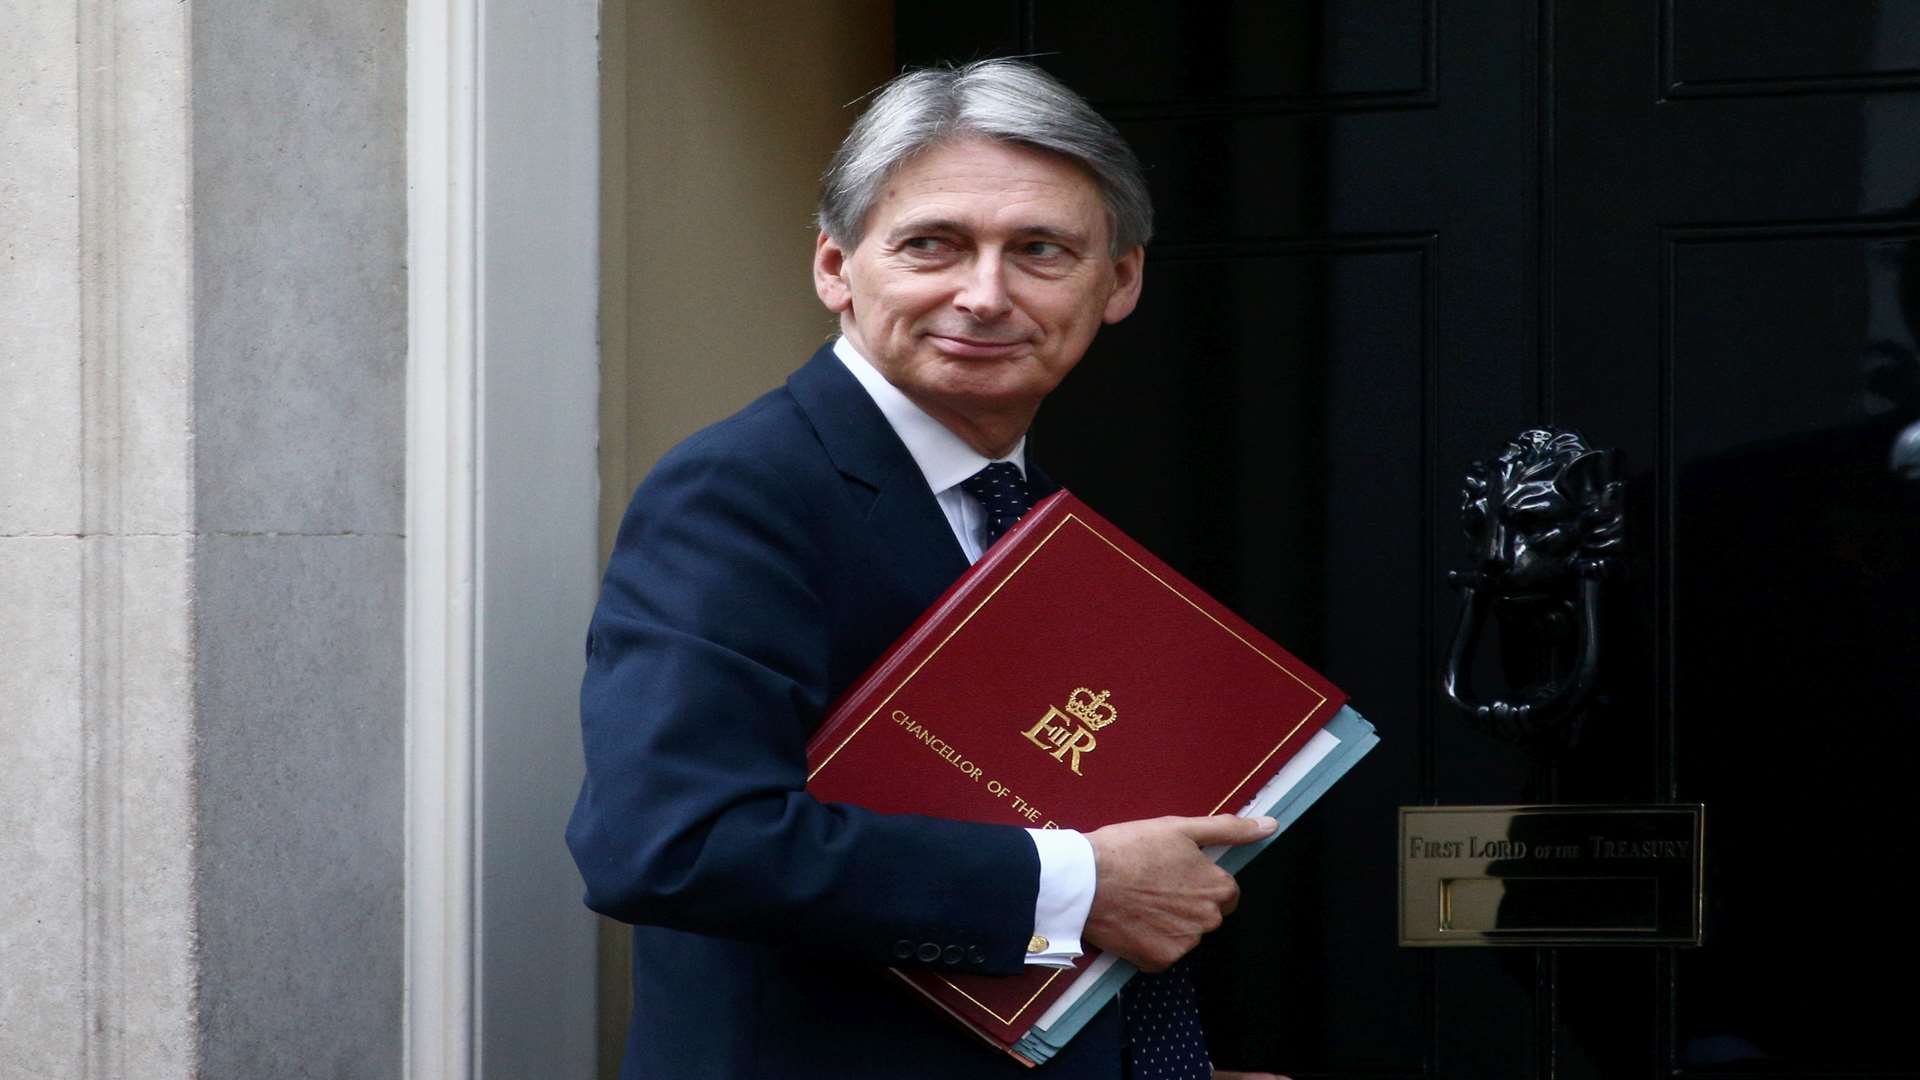 Chancellor of the Exchequer Philip Hammond. Picture: Adam Gray / SWNS.com